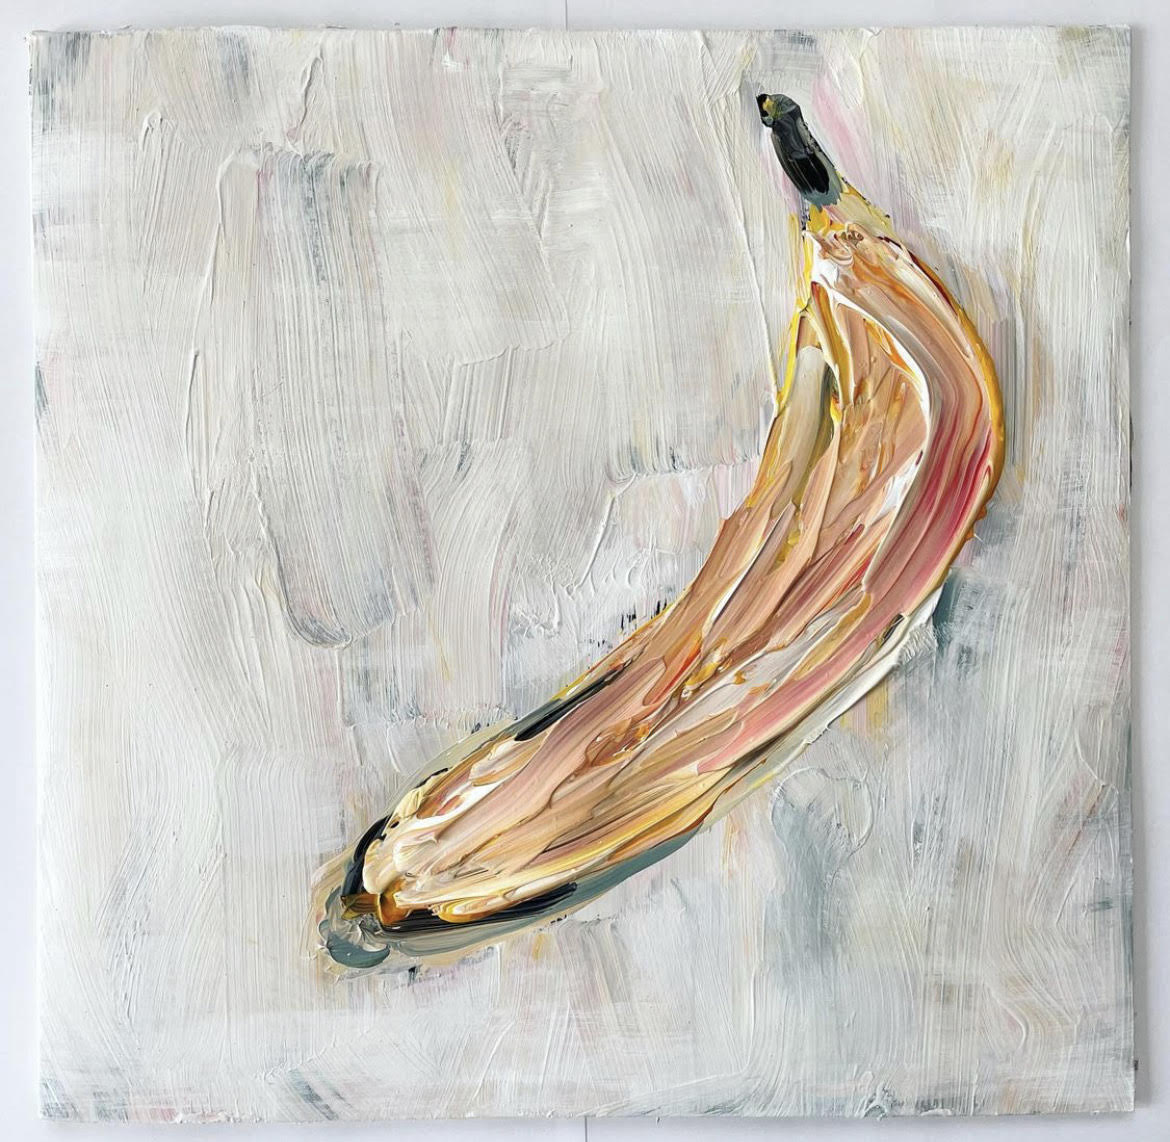 Banana portrait